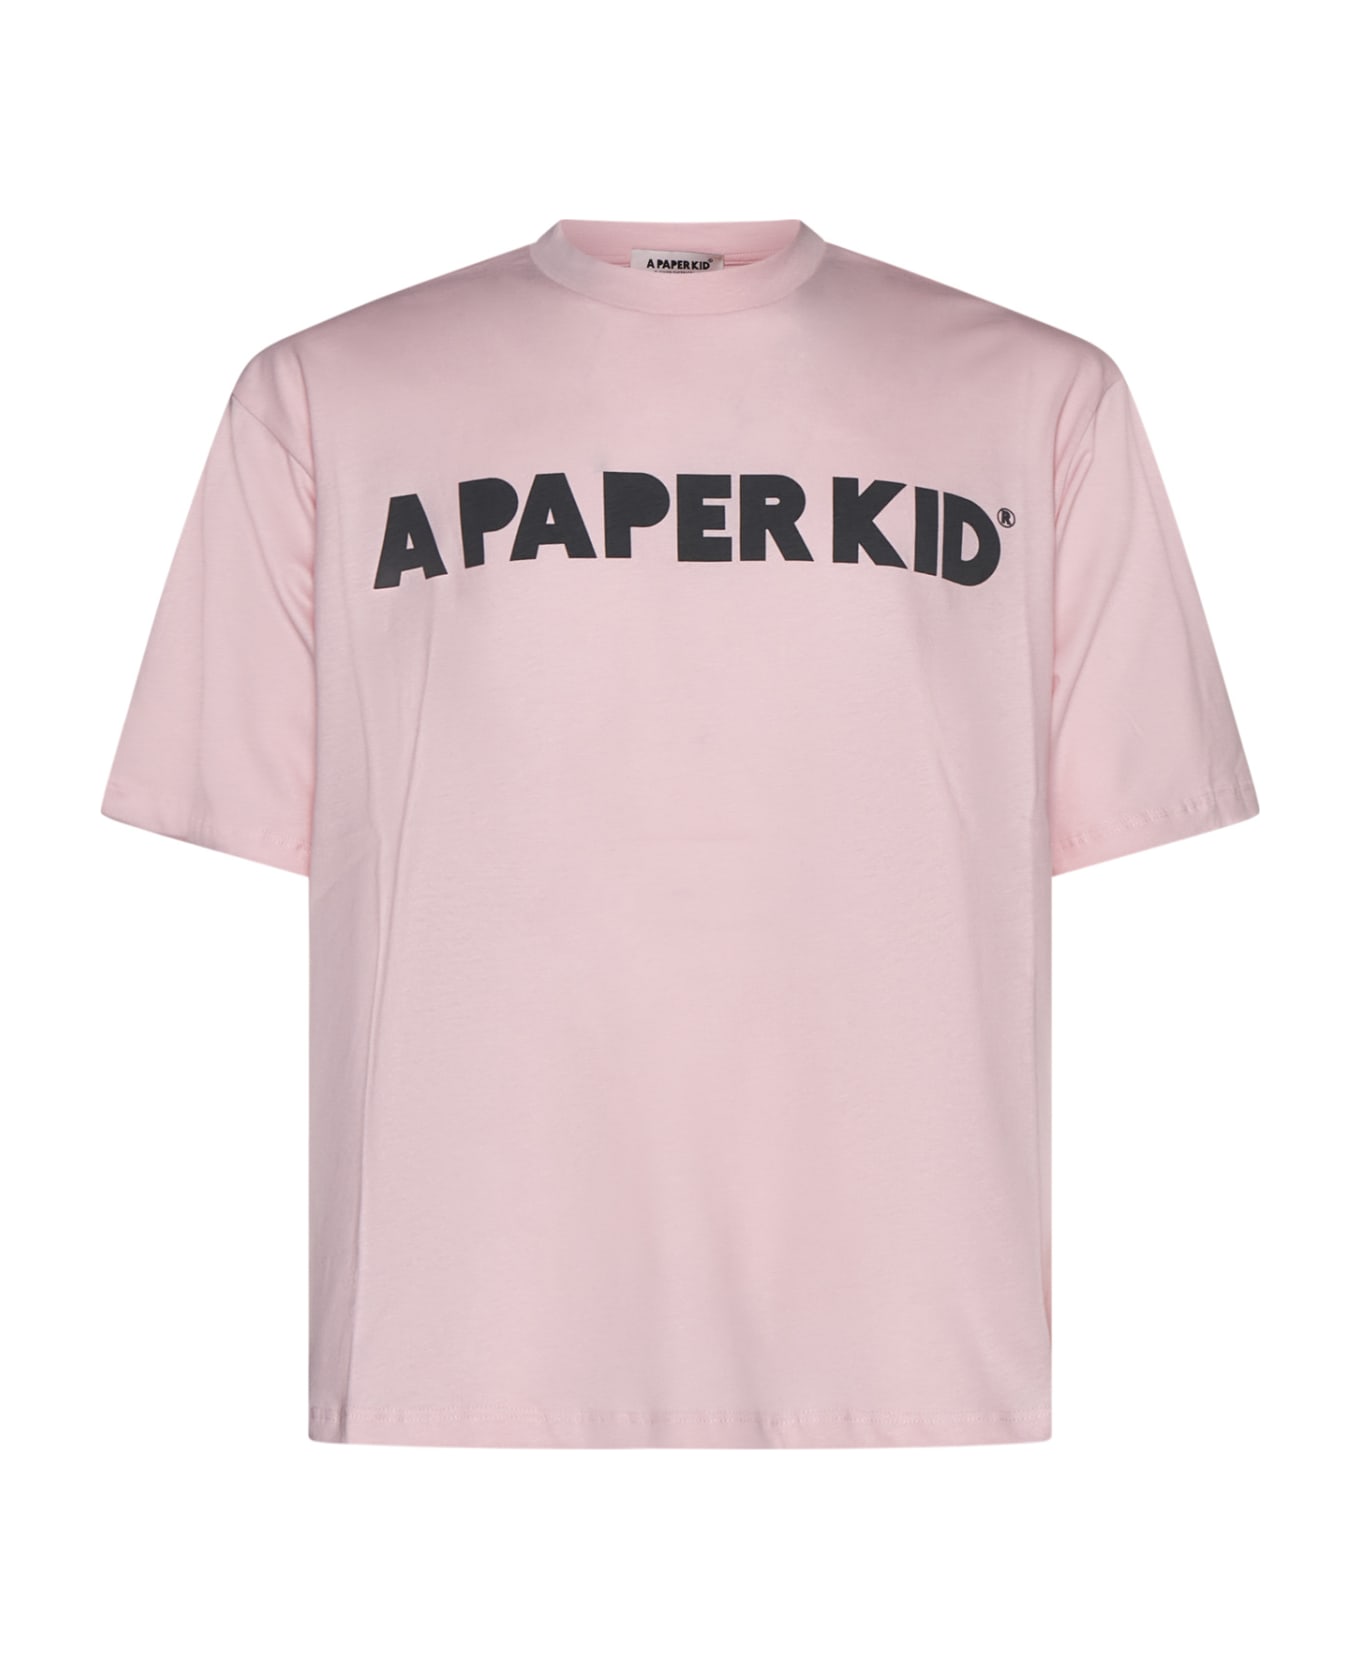 A Paper Kid T-Shirt - Pink